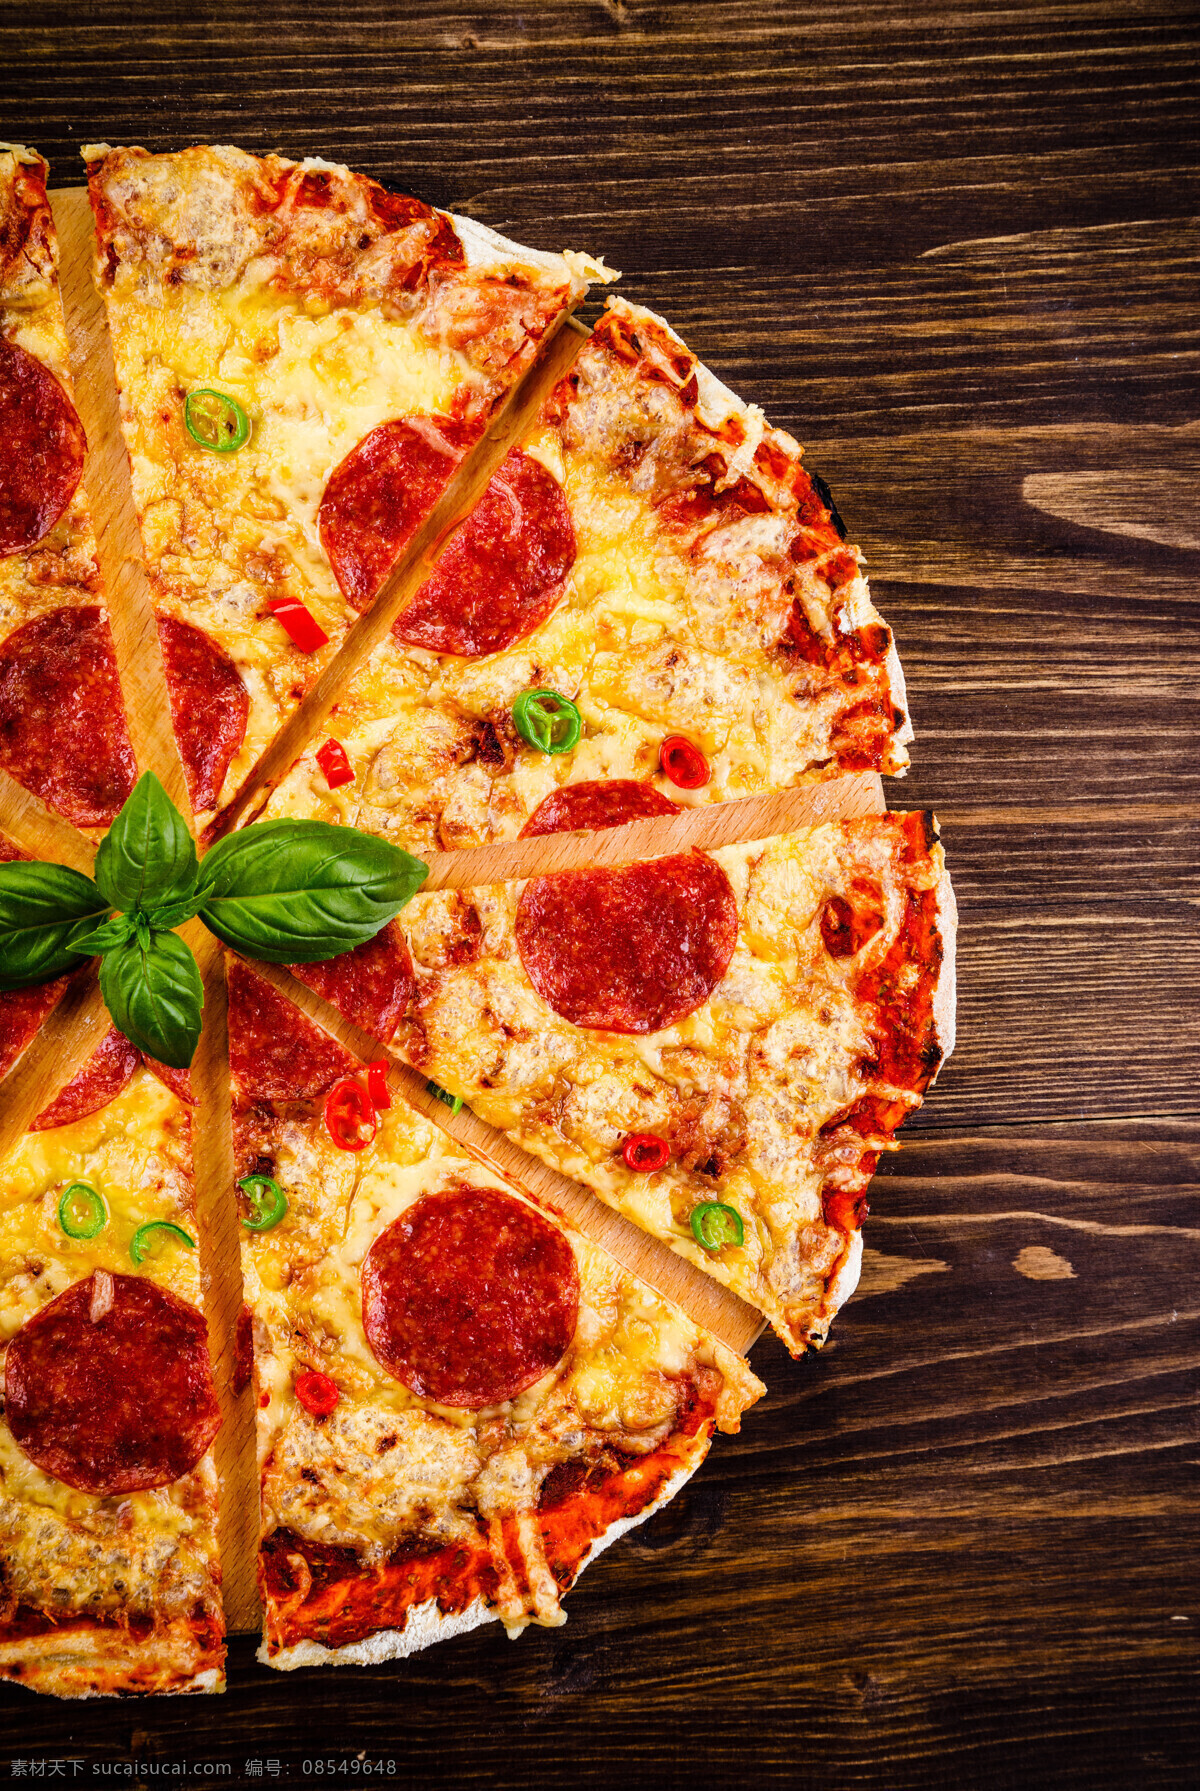 pizza 披萨 比萨 披萨海报 披萨展板 披萨文化 披萨促销 披萨西餐 披萨快餐 披萨加盟 披萨店 披萨必胜店 比萨披萨 披萨包装 披萨美食 西式披萨 披萨馅饼 披萨价格表 披萨外卖 披萨画 披萨菜单 正宗披萨 披萨饼 披萨传单 意大利披萨 美味披萨 餐饮美食 西餐美食